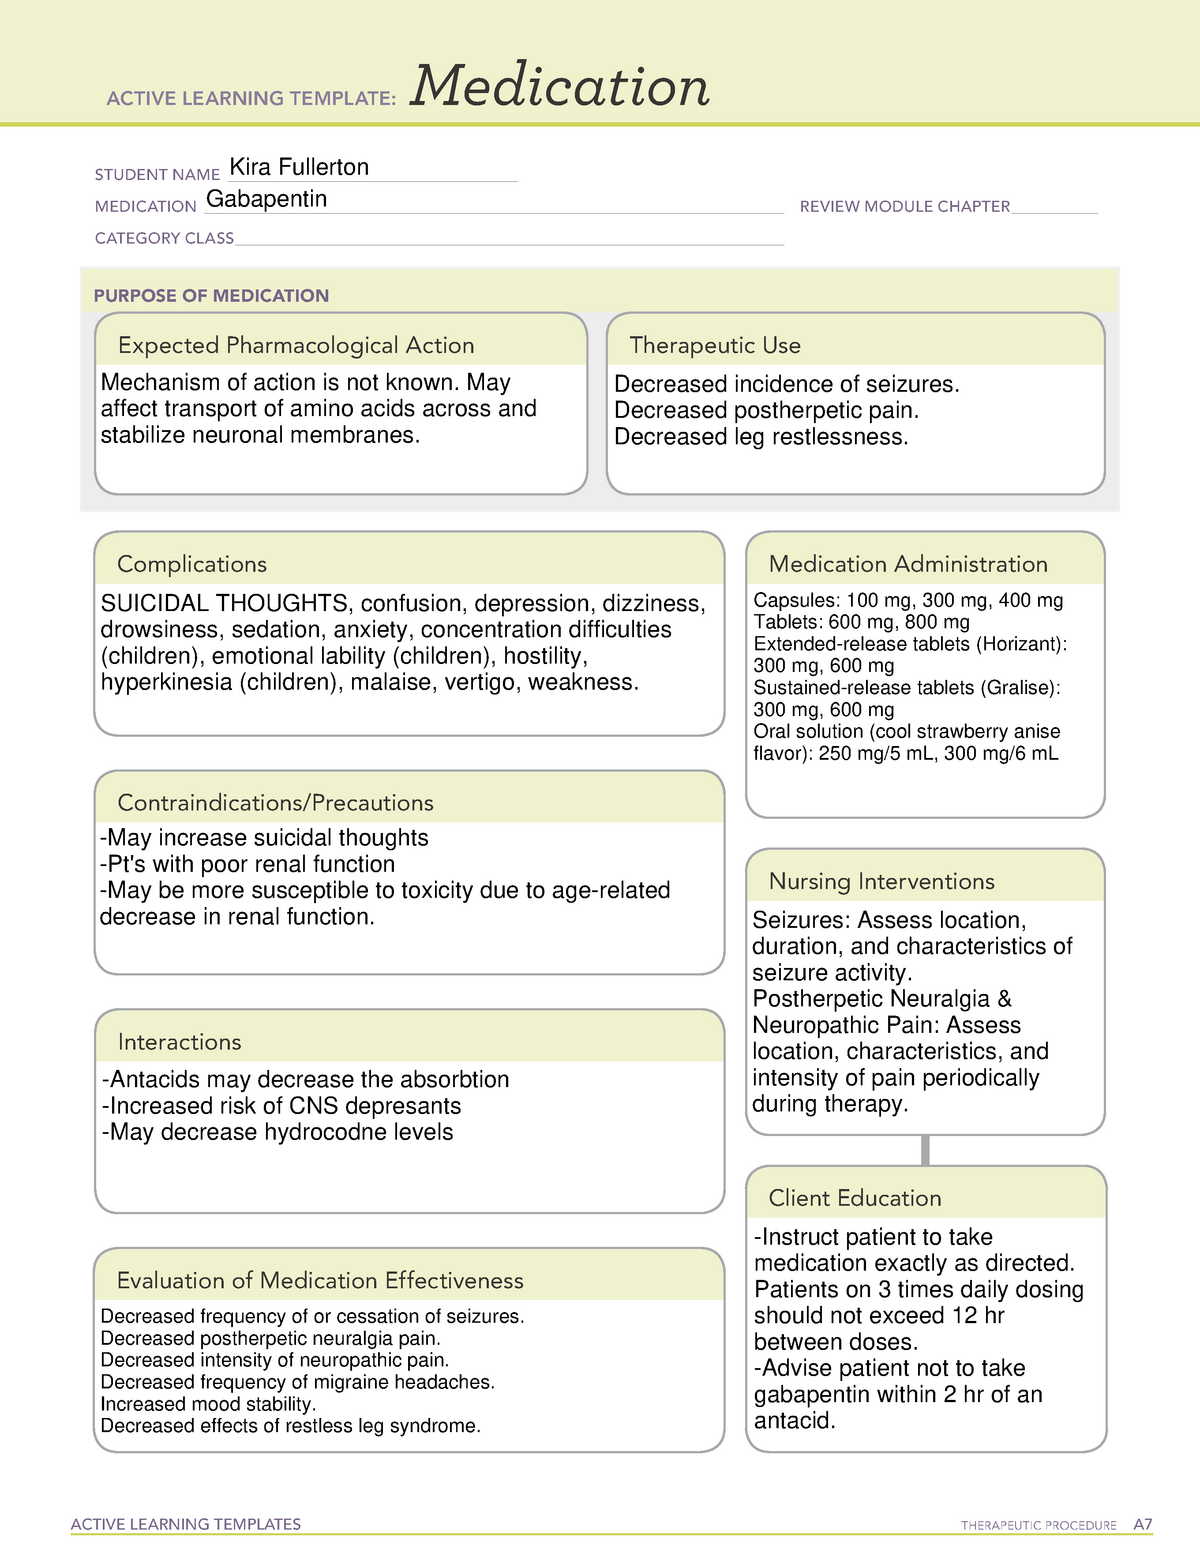 MED Gabapentin ATI medications sheet ACTIVE LEARNING TEMPLATES